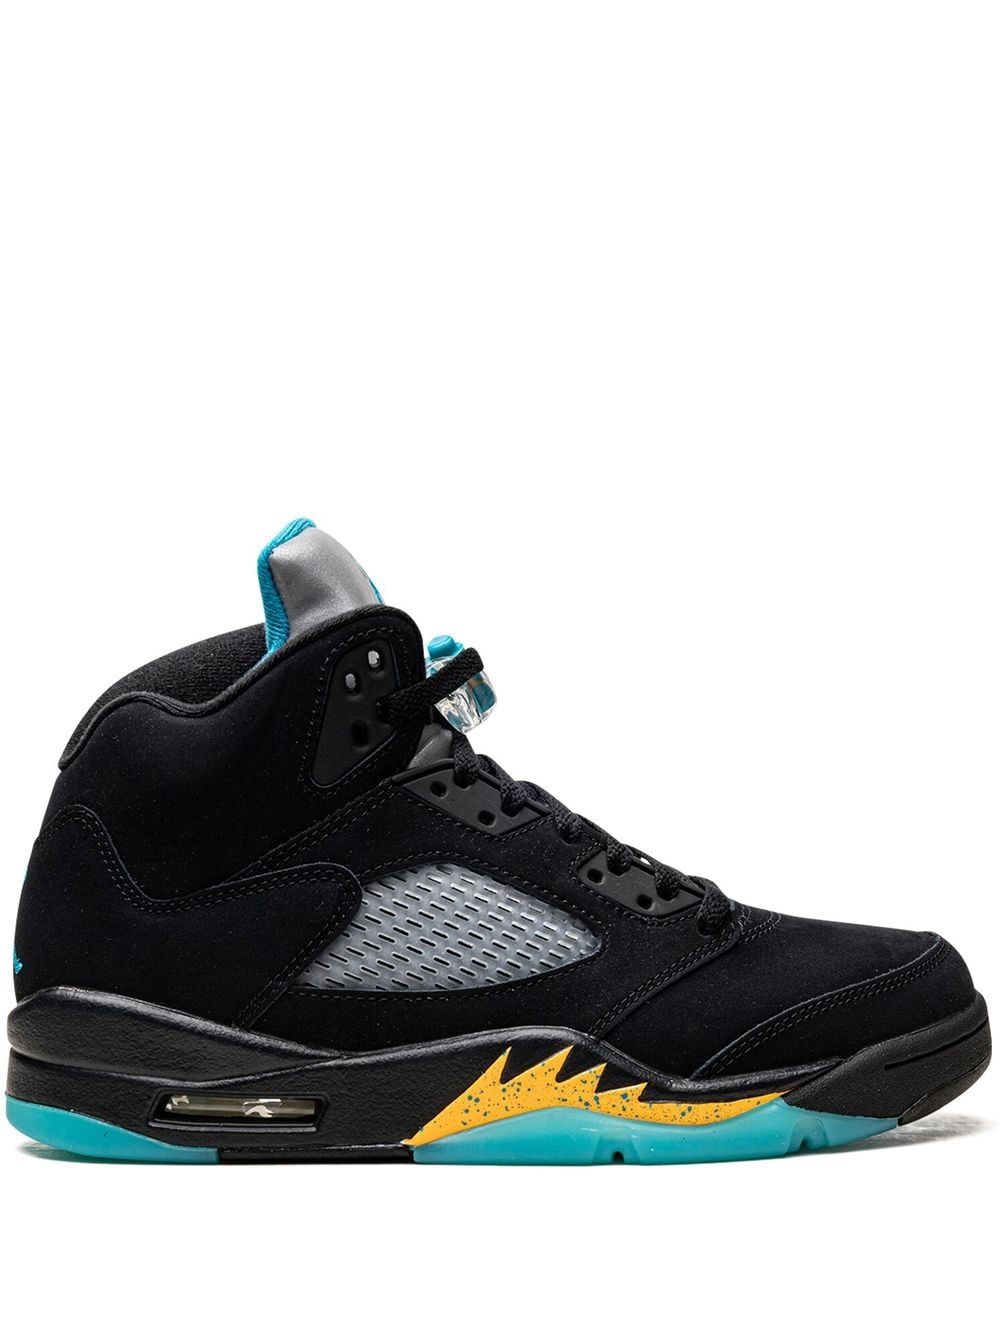 Jordan Air Jordan 5 "Aqua" sneakers - Black